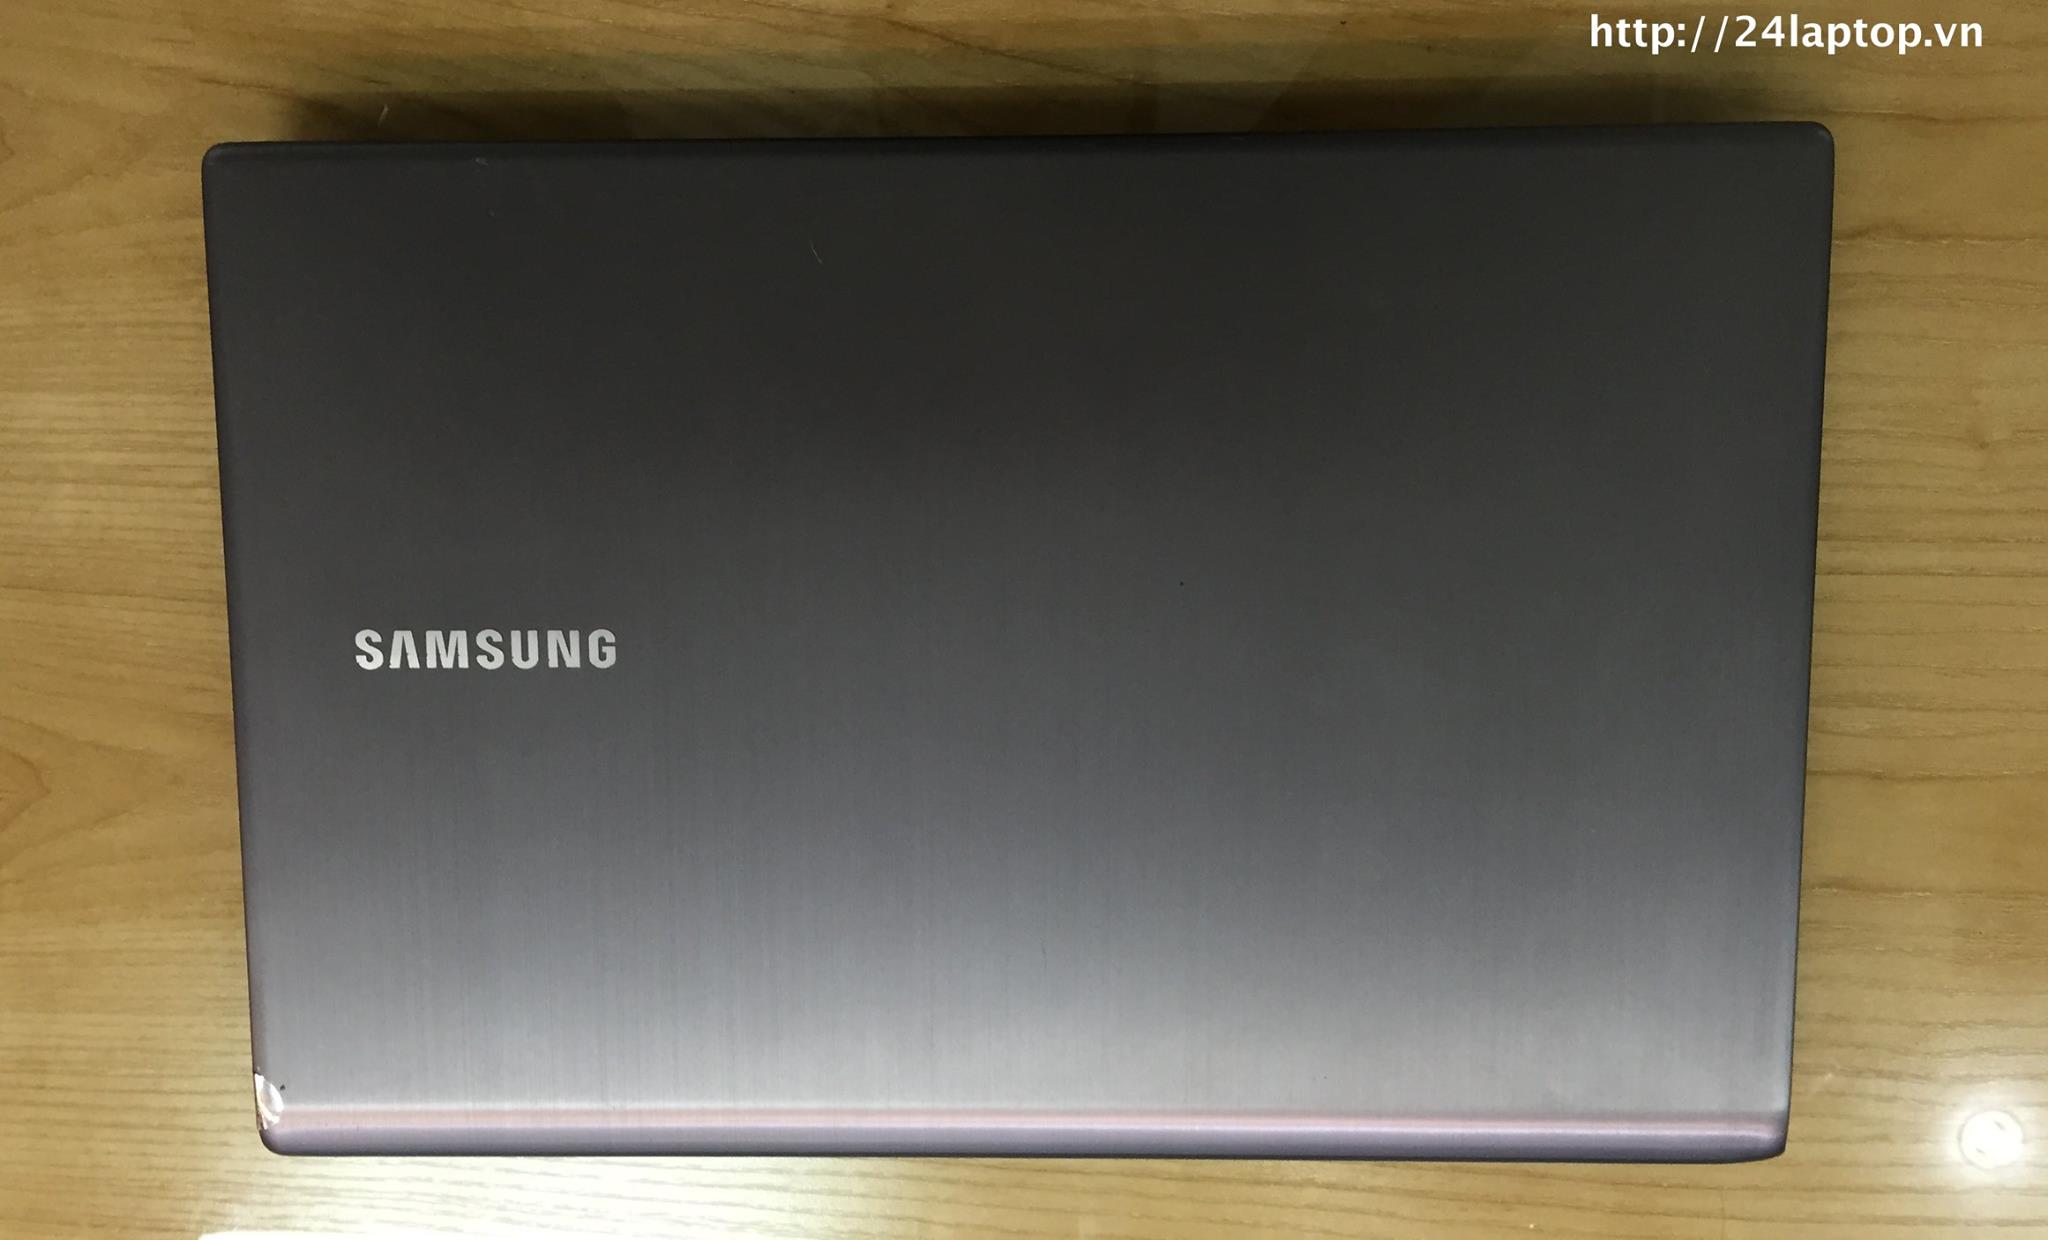 Samsung NP700_3.jpg